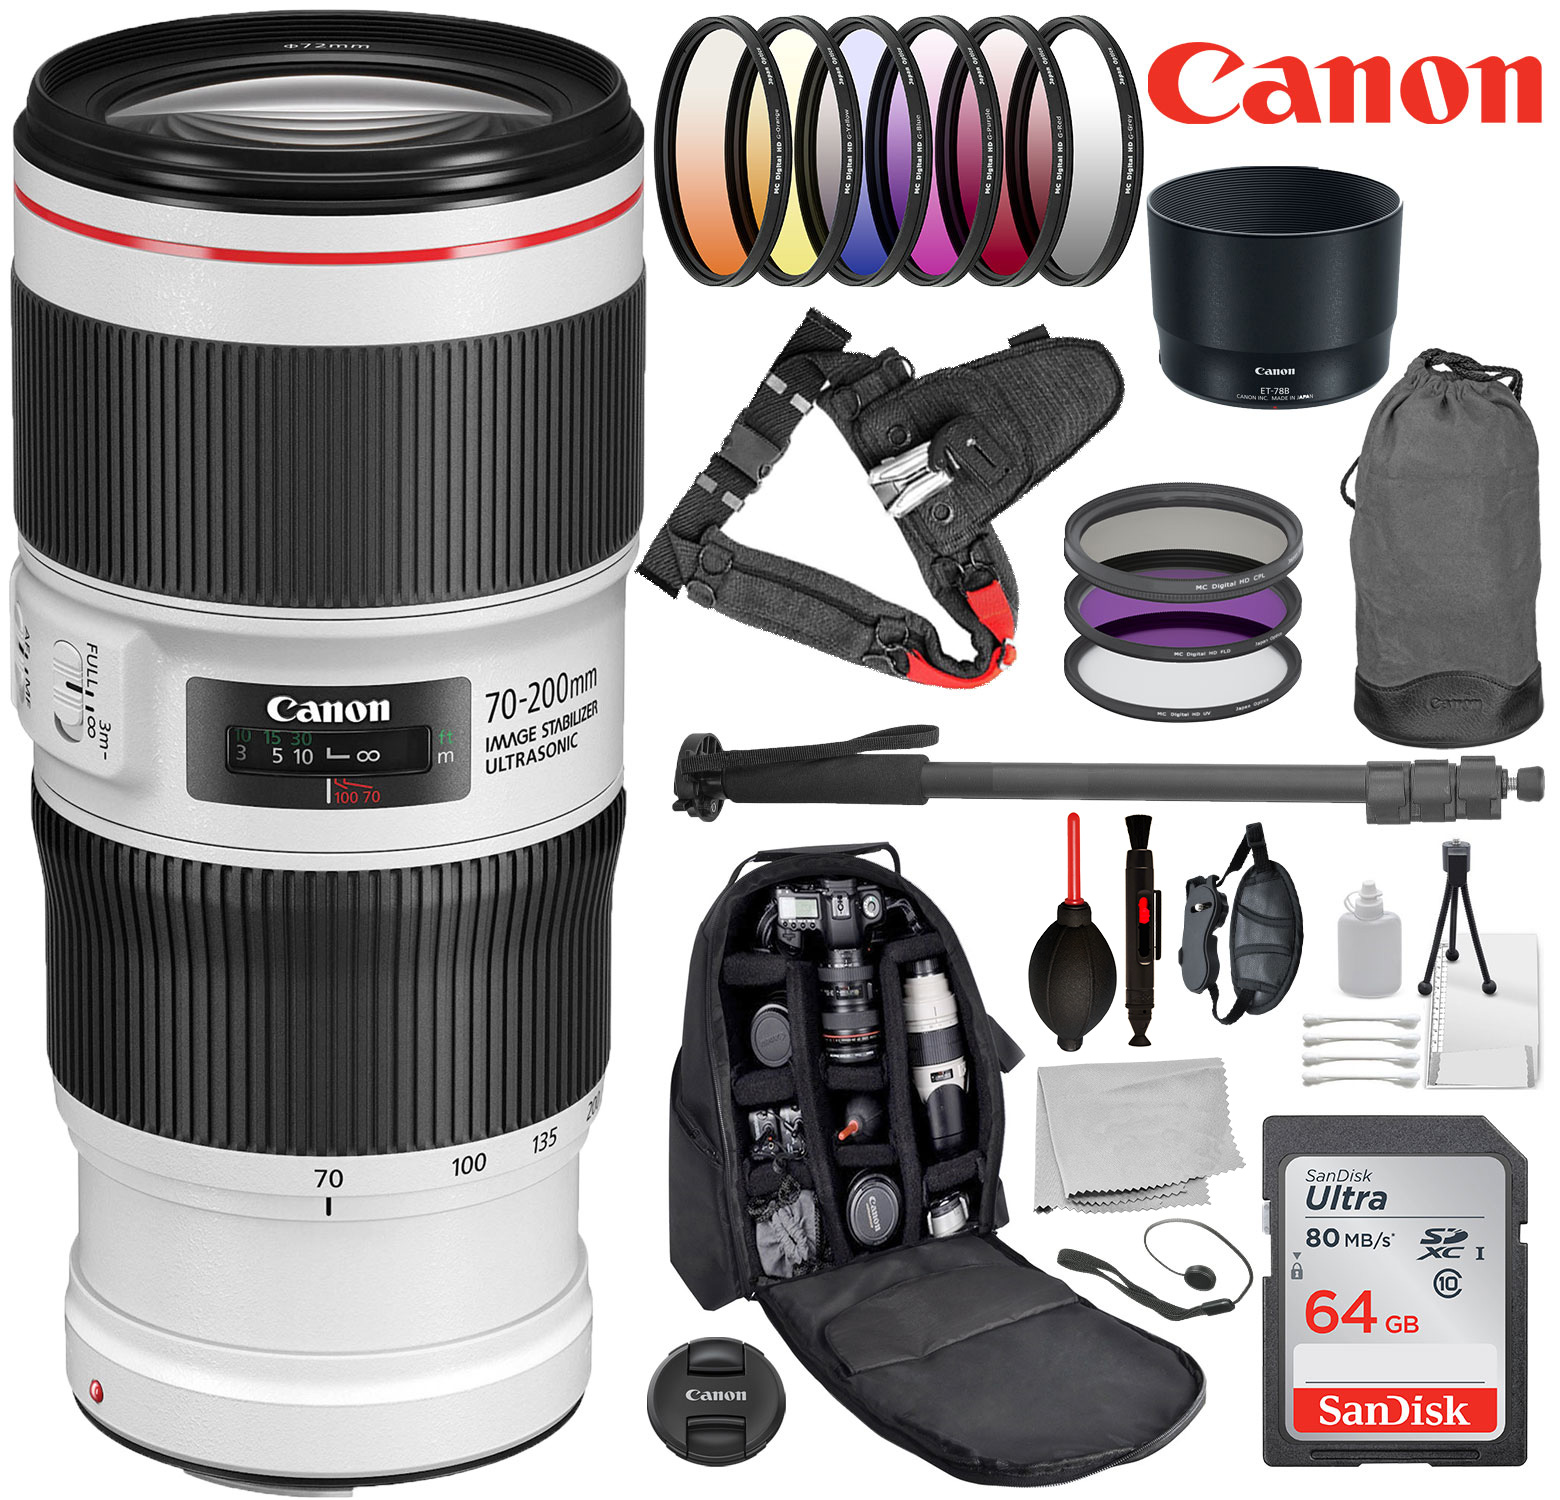 Canon EF 70-200mm f/4L IS II USM Lens - 2309C002 with 18pc Advanced Lens Bundle